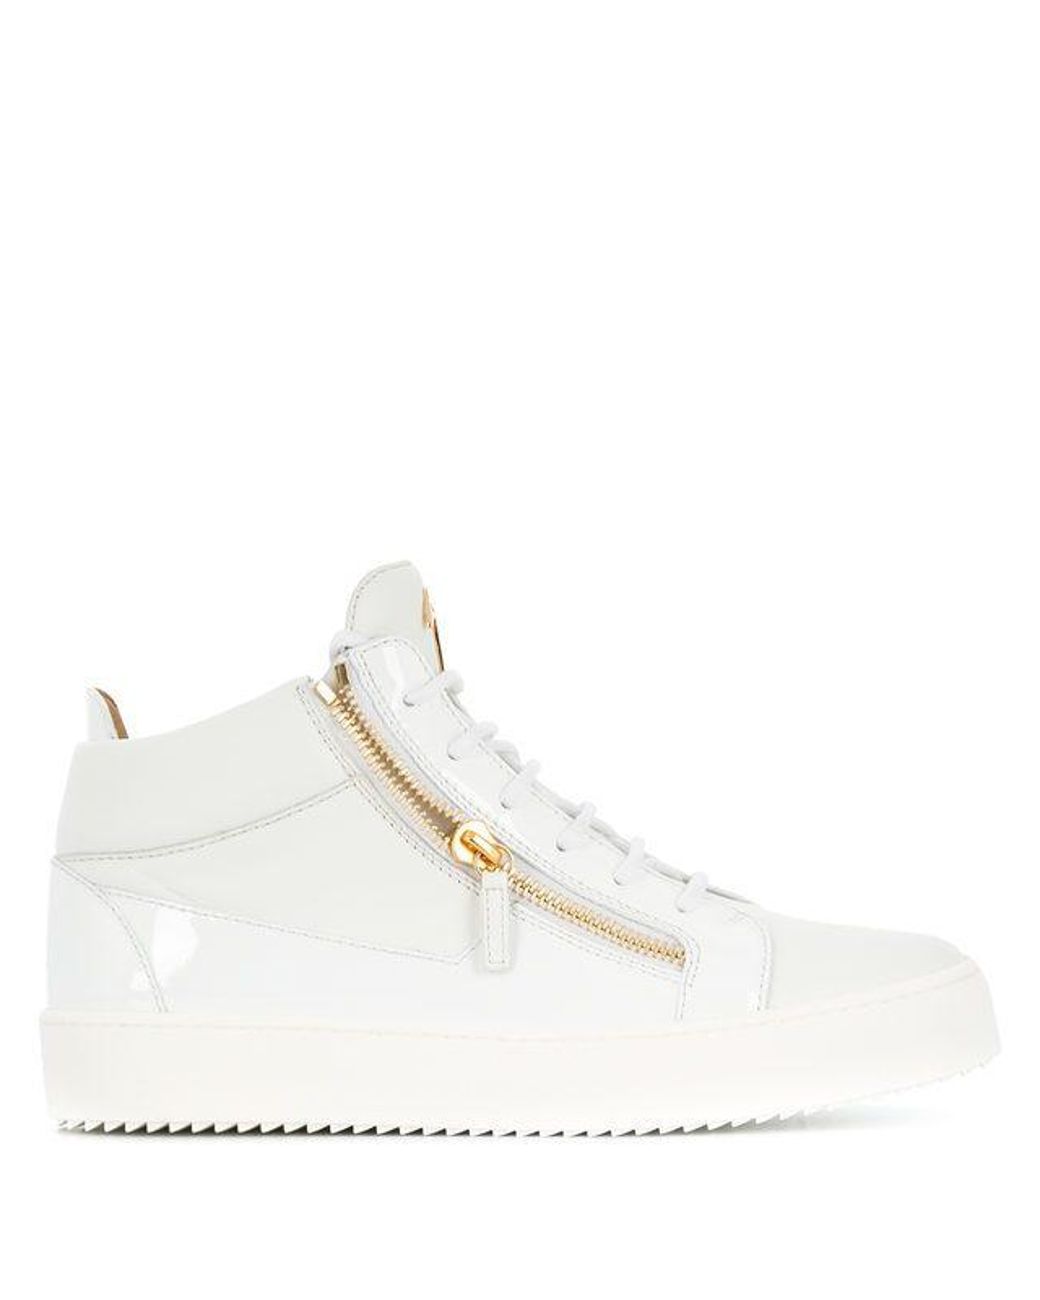 Giuseppe Zanotti Leather Sneakers in White for Men - Lyst